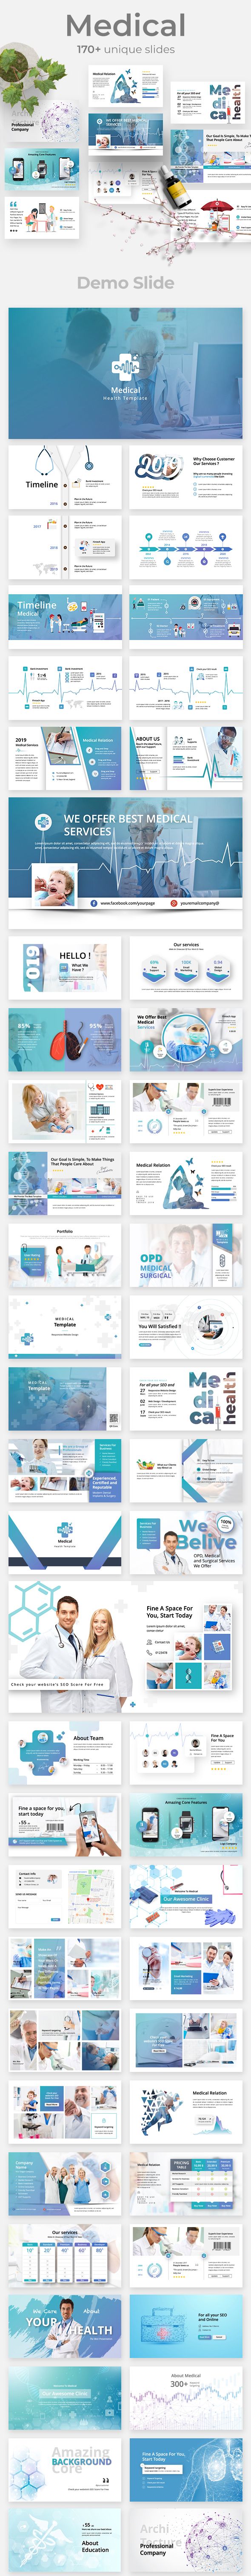 Healthcare-Advertising-Medical-Healthy-PowerPoint-Template-170 Healthcare Advertising : Medical & Healthy PowerPoint Template - 170+ Unique Slides